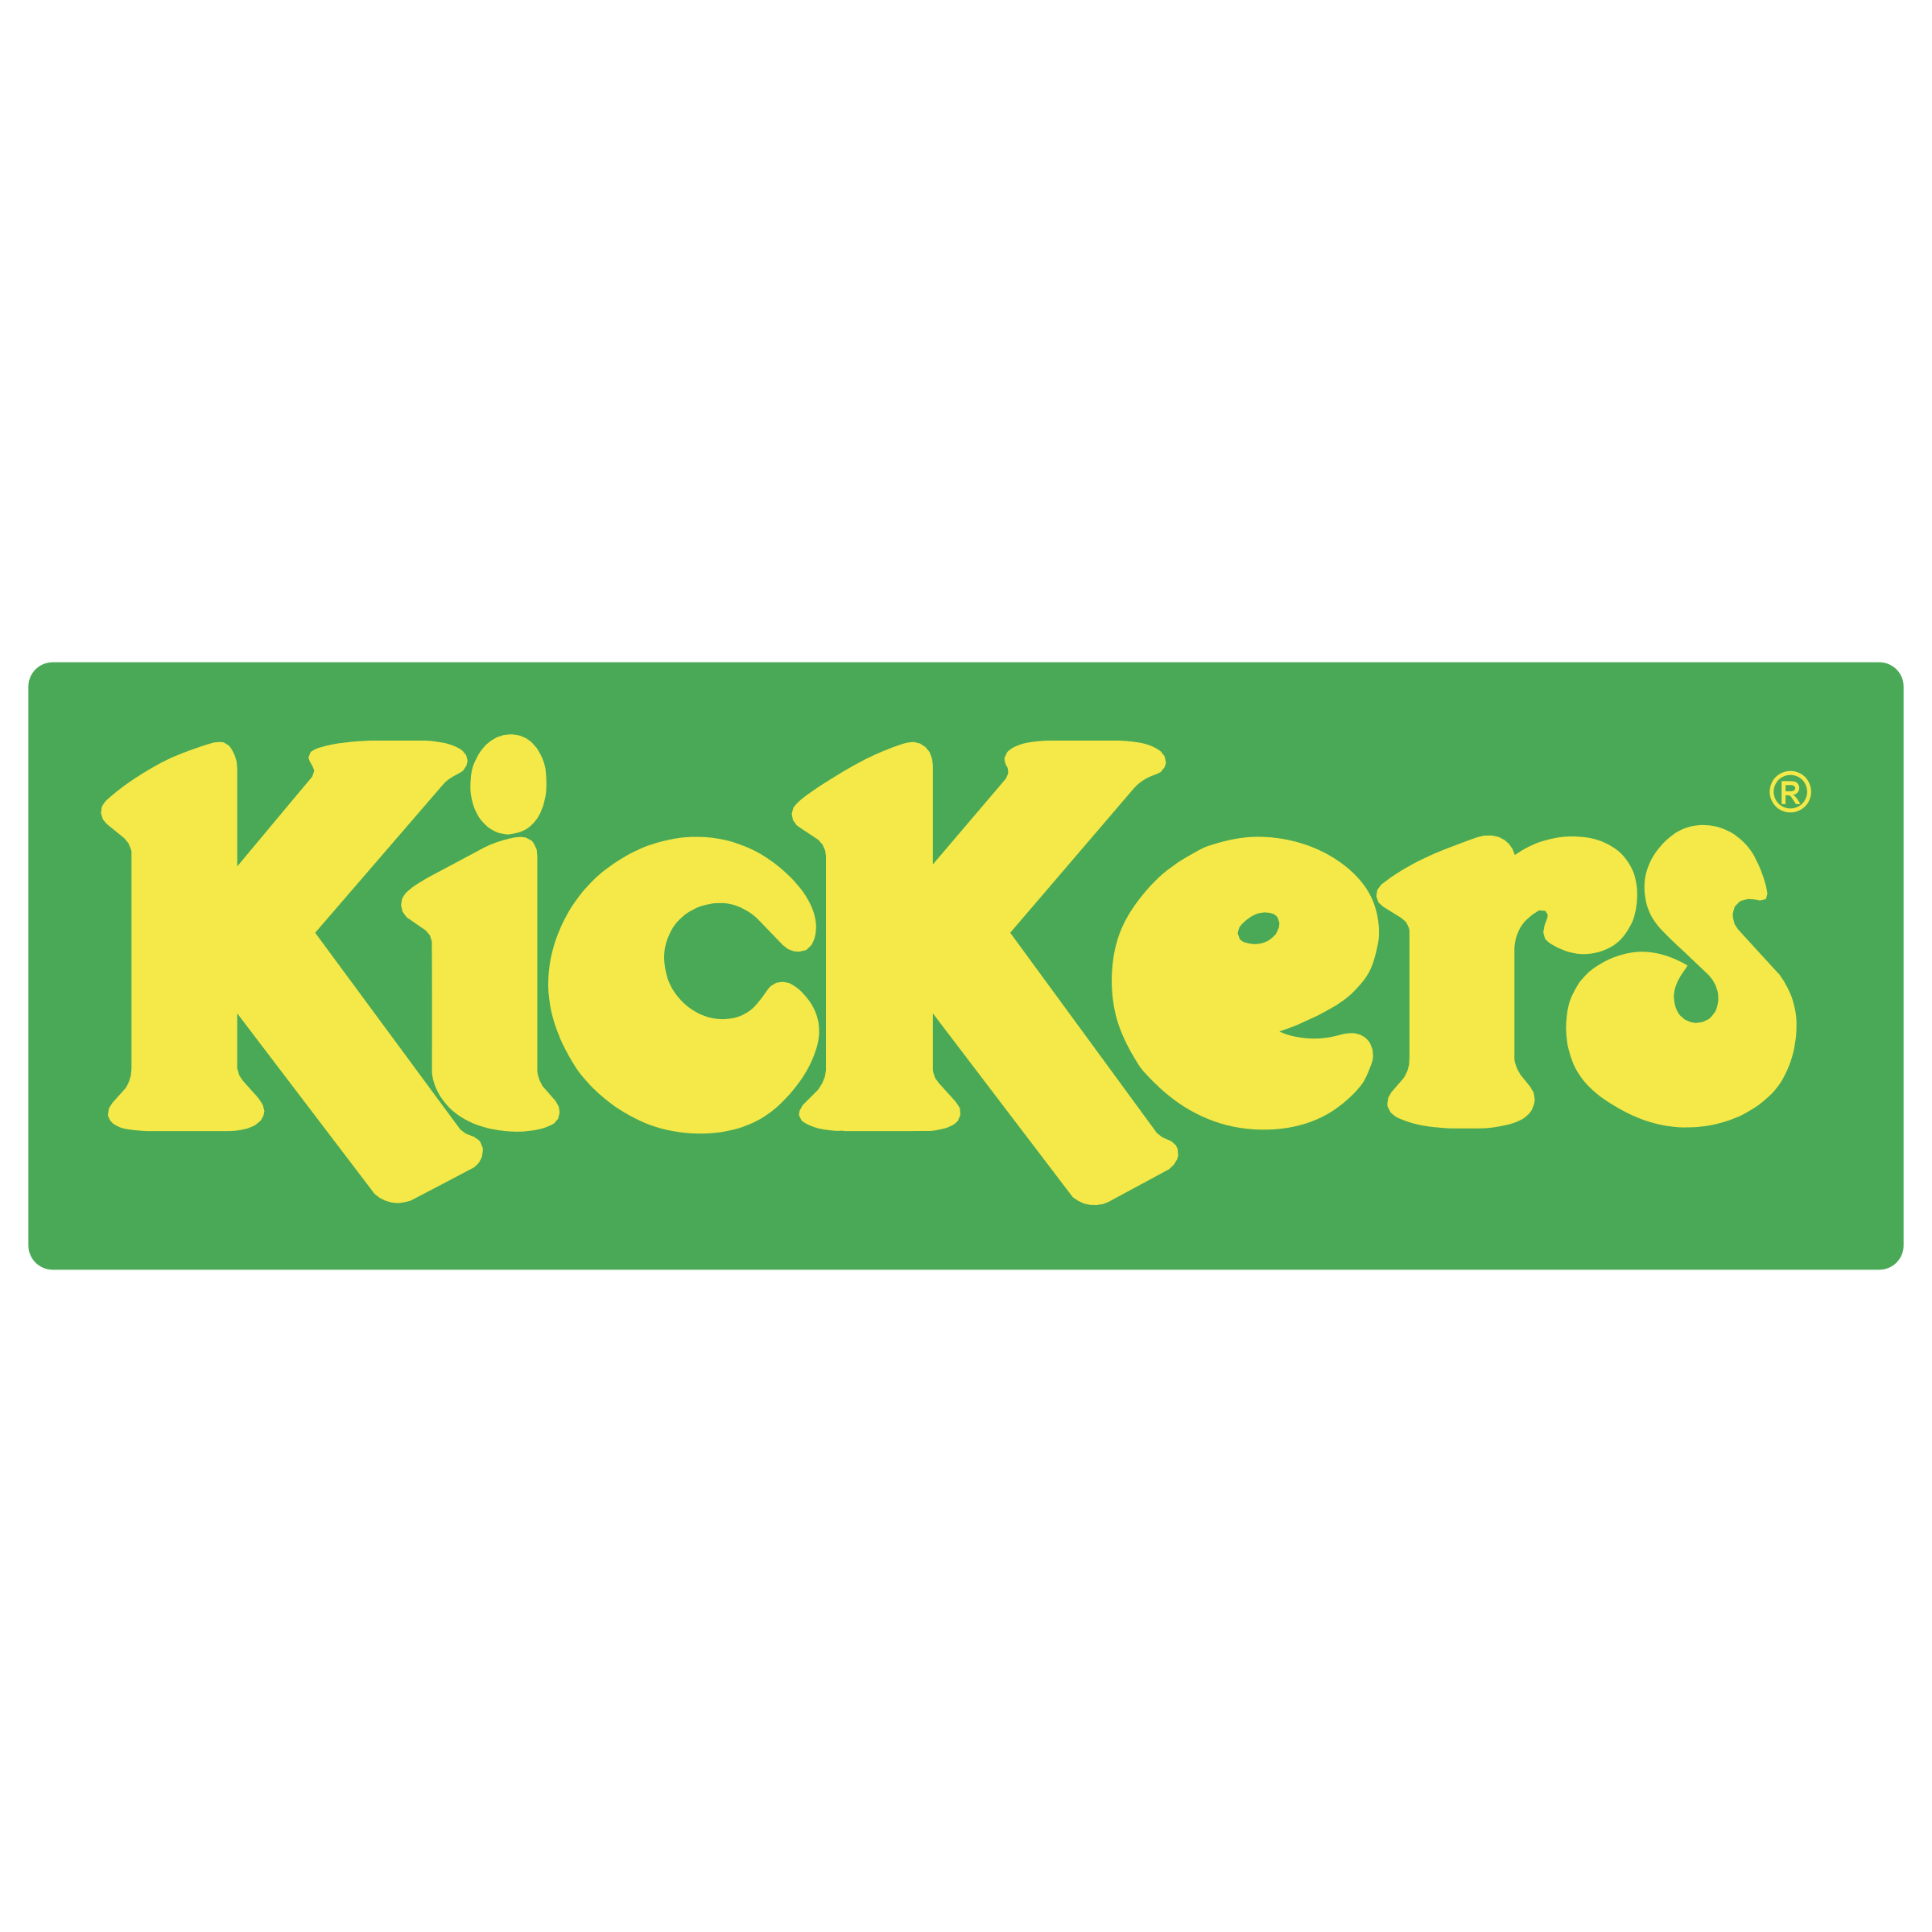 Kickers Logo - KicKers Logo PNG Transparent & SVG Vector - Freebie Supply